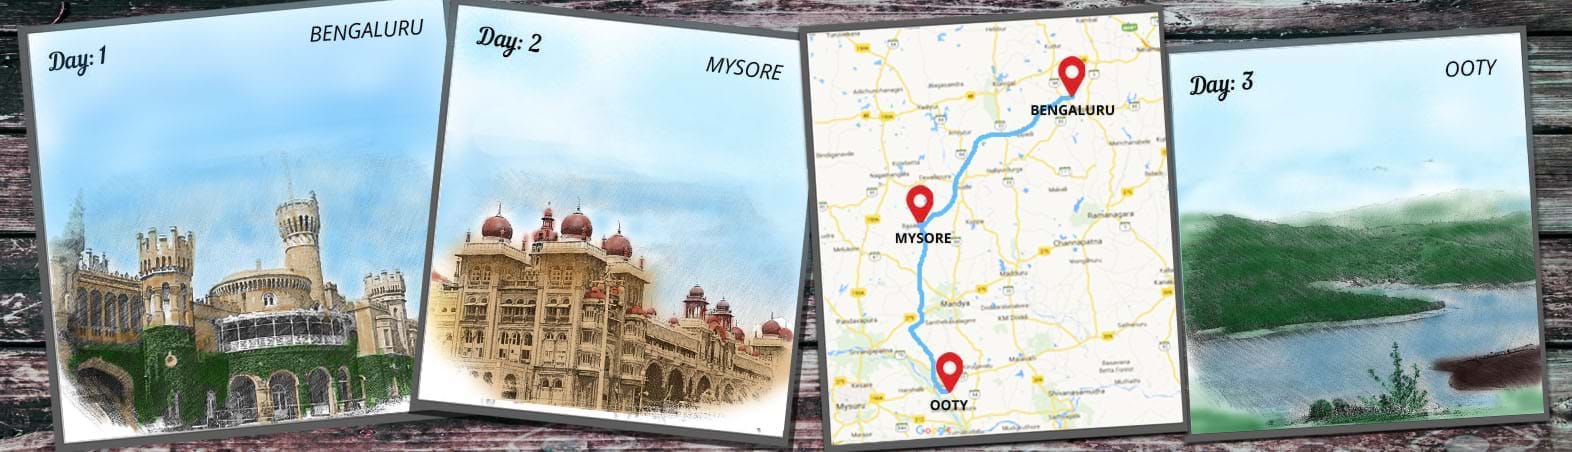 Bengaluru-Mysore-Ooty Circuit